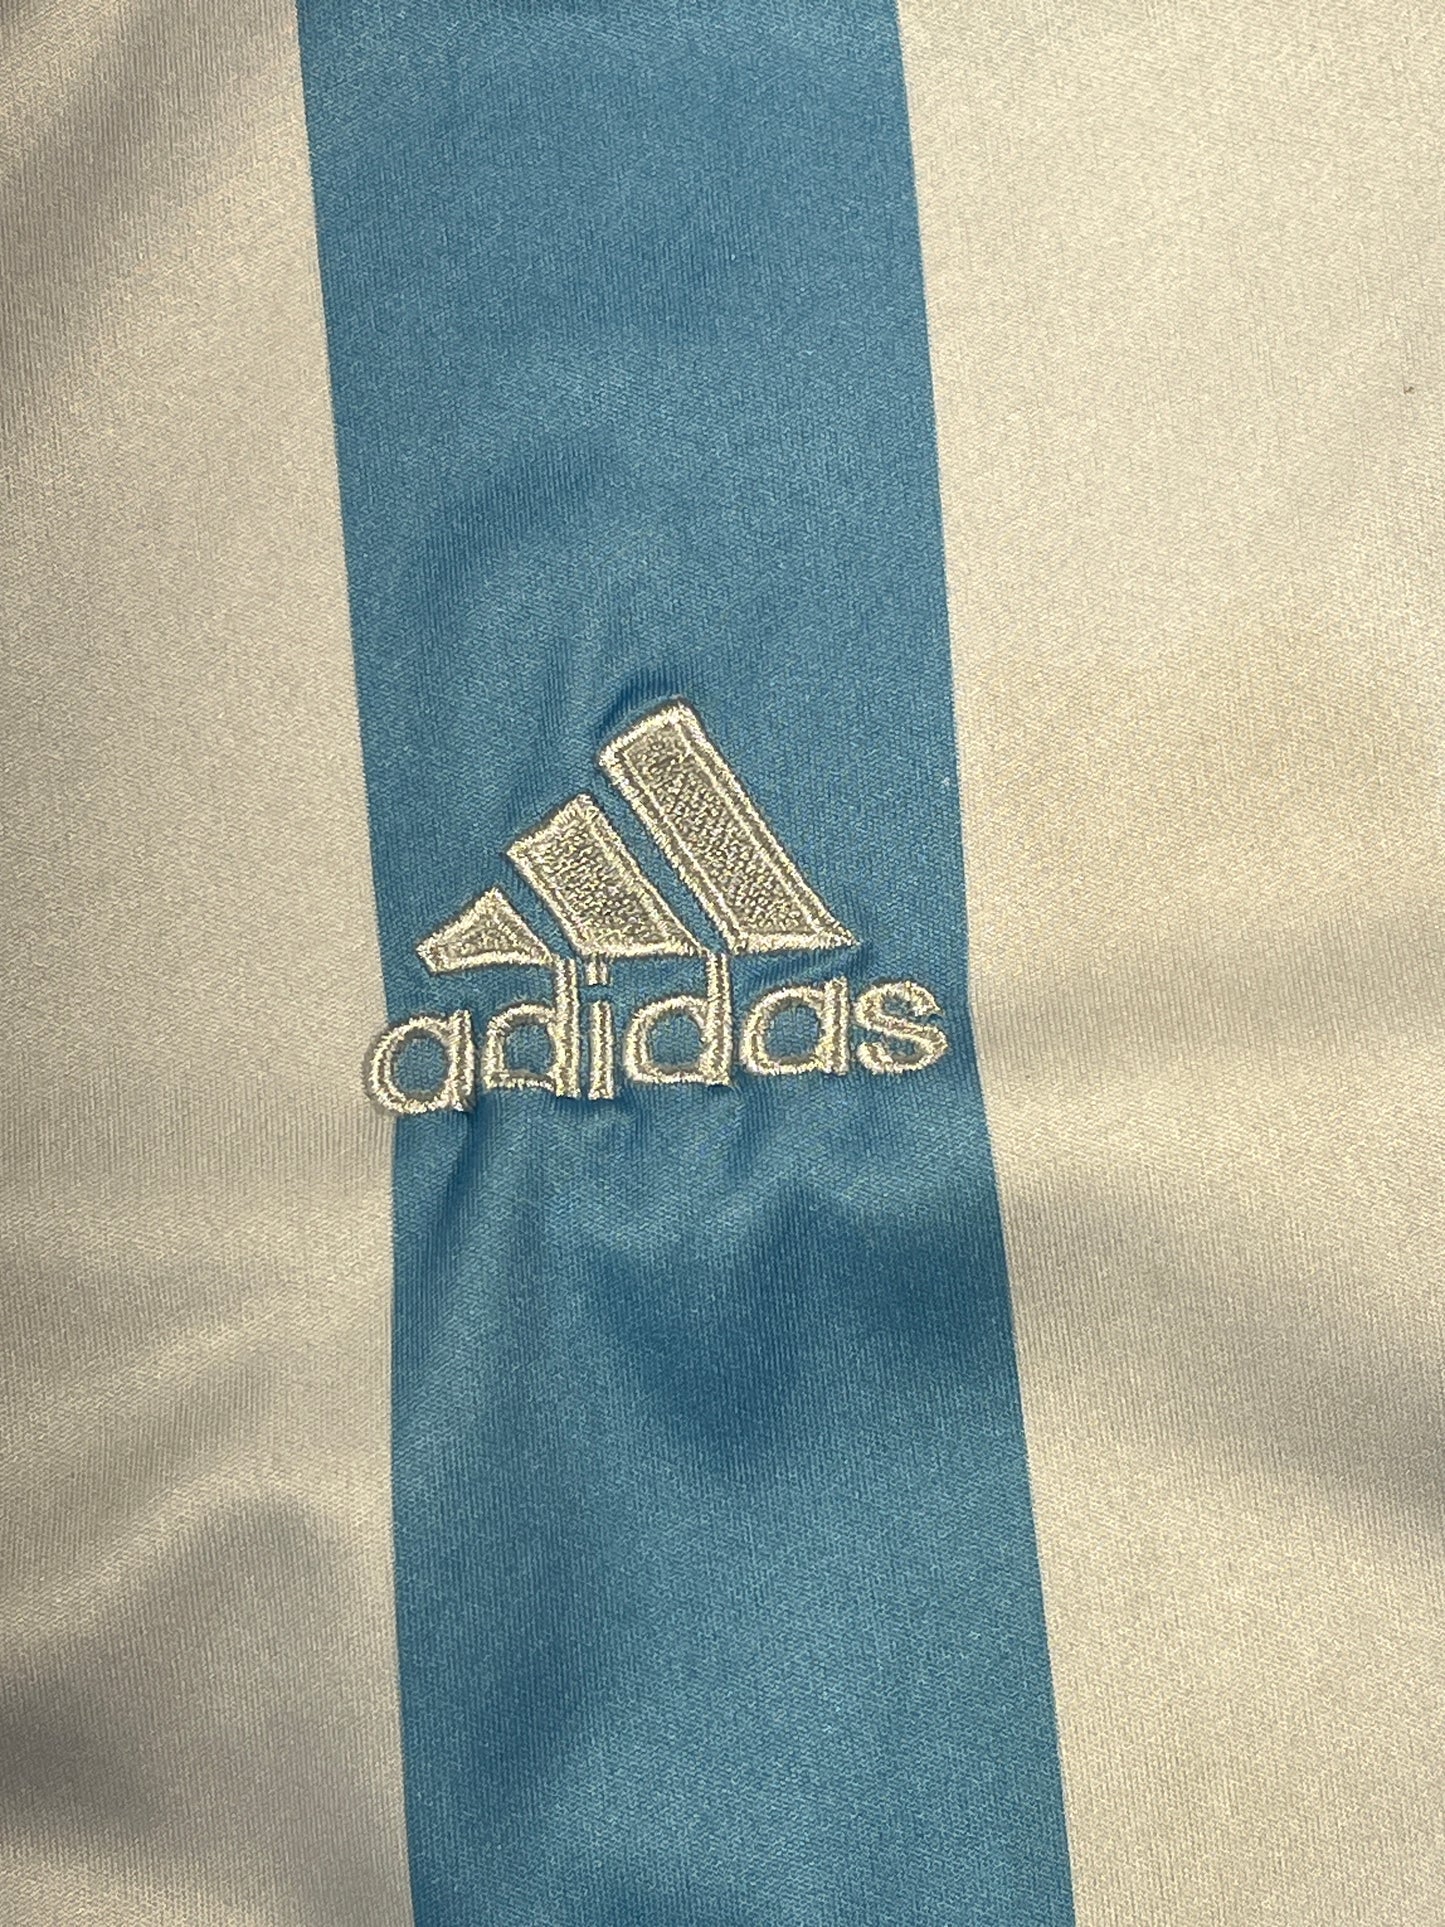 Vintage Argentina Soccer Jersey Adidas